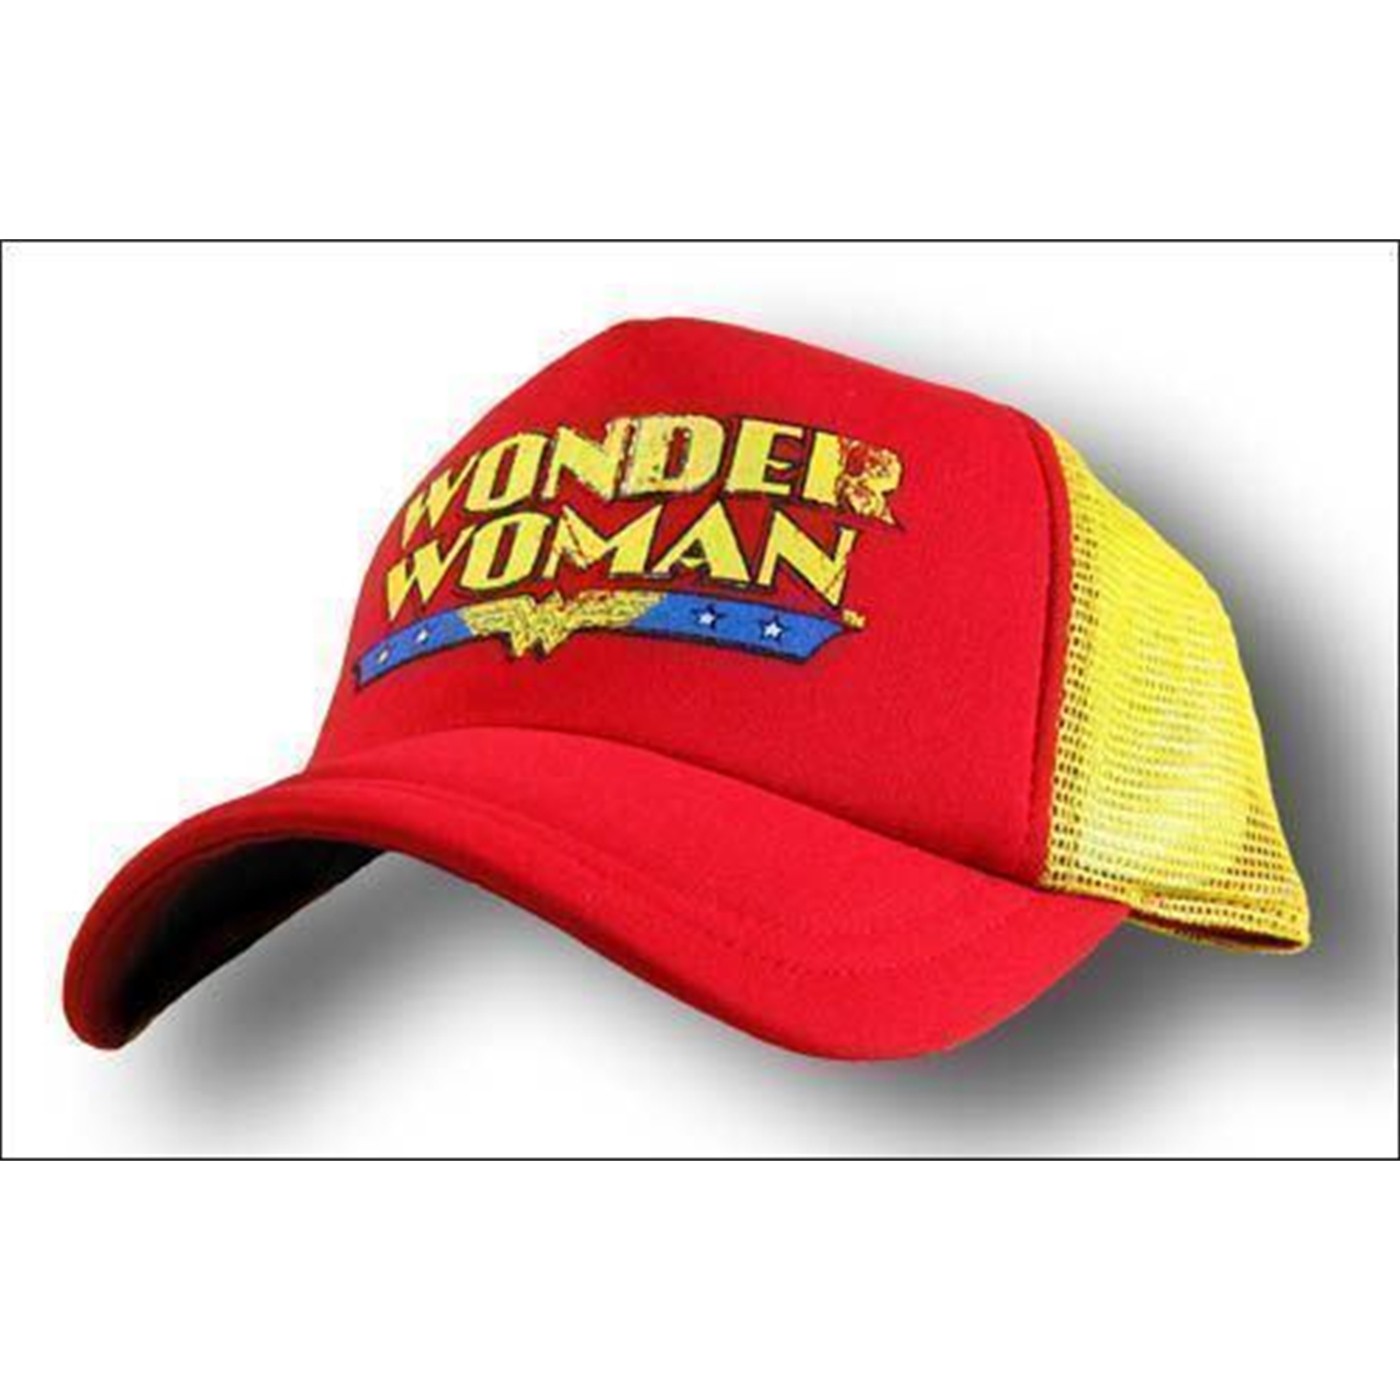 Wonder Woman Red Baseball Cap